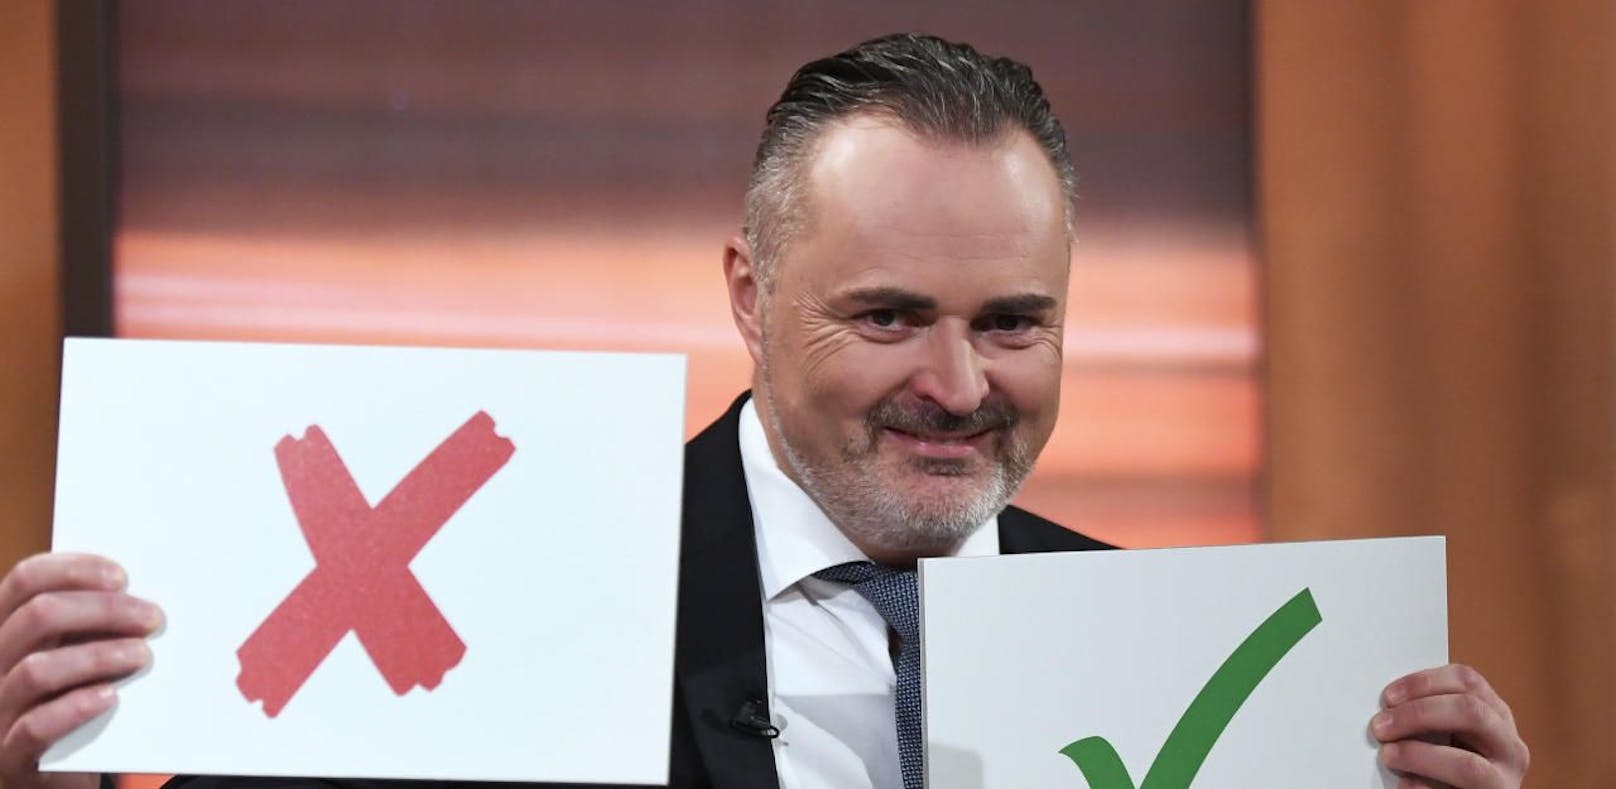 Burgenlands SPÖ-Landeshauptmann Hans Peter Doskozil kritisiert die türkis-grünen Asylpläne vehement.
